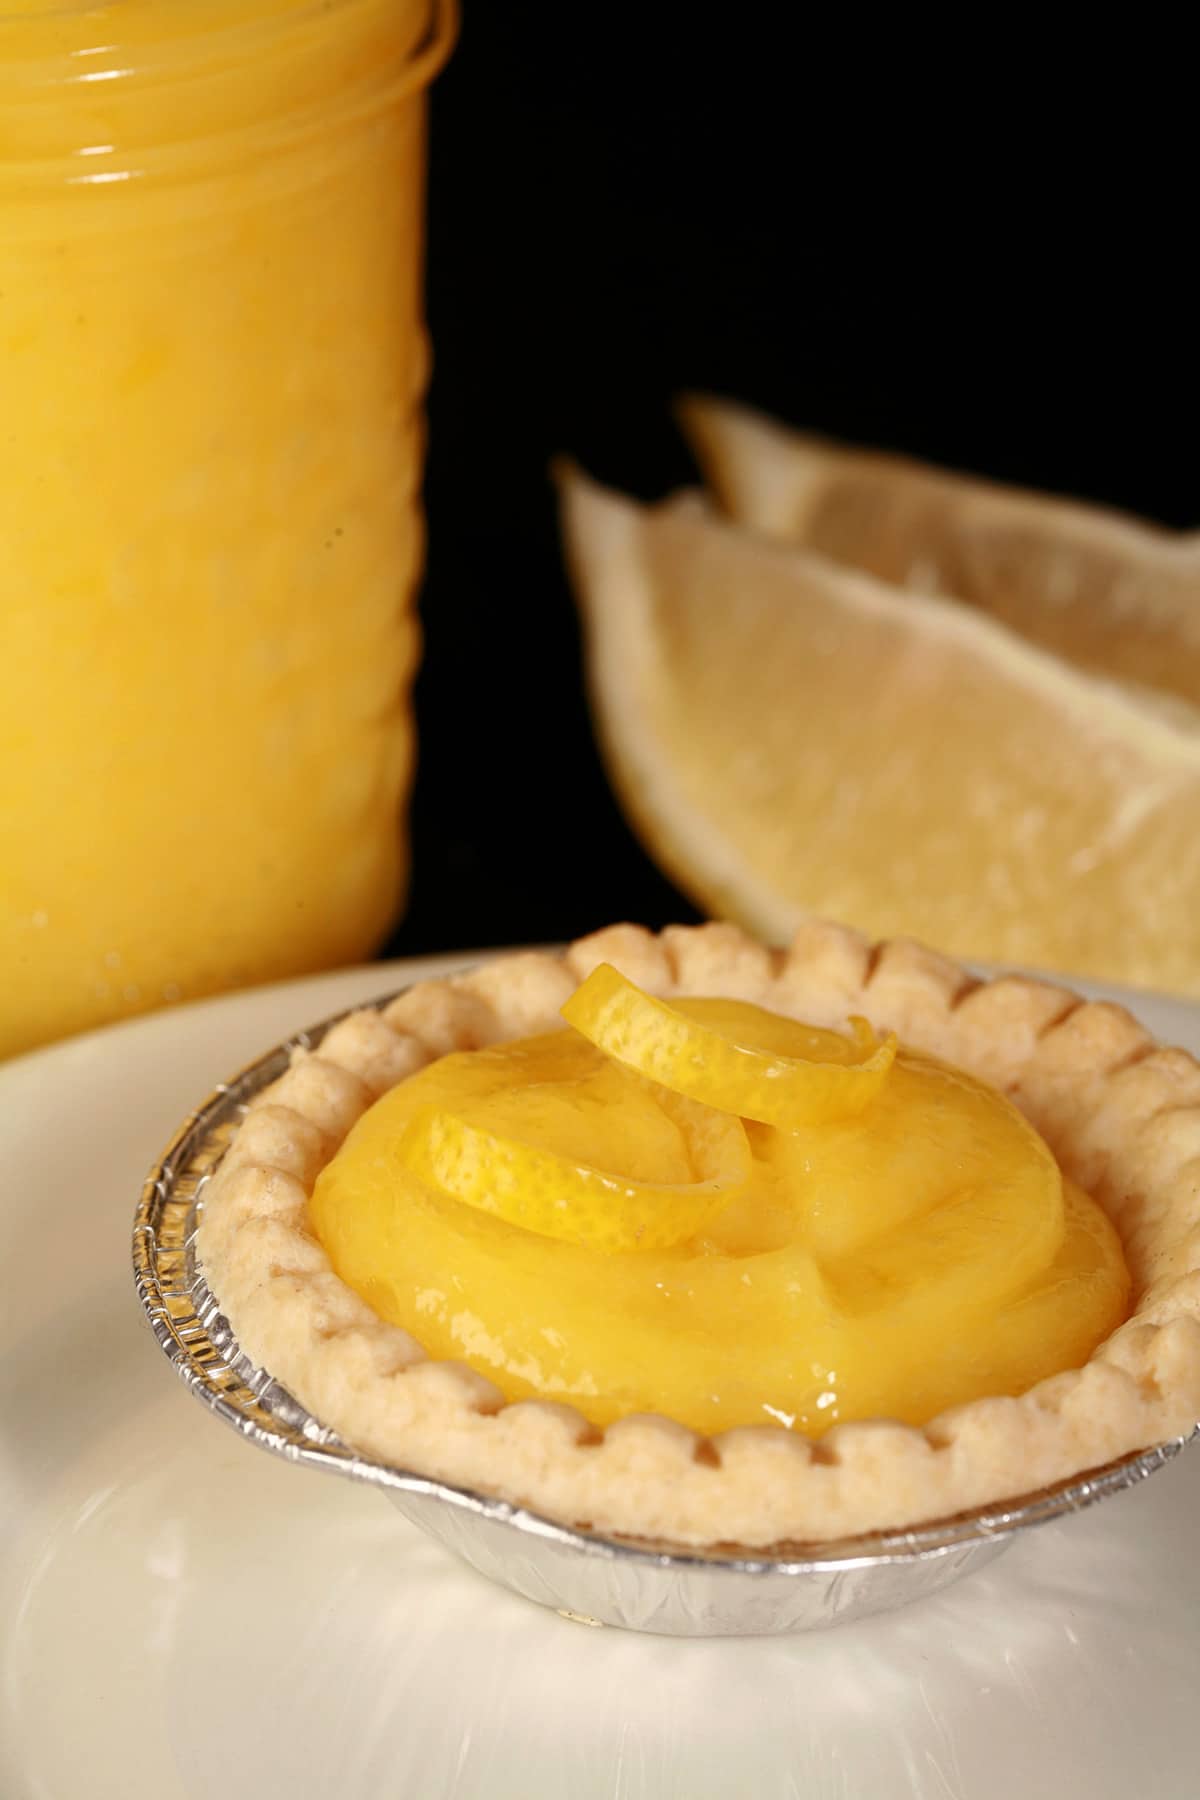 A lemon tart on a plate, next to a jar of homemade lemon curd.